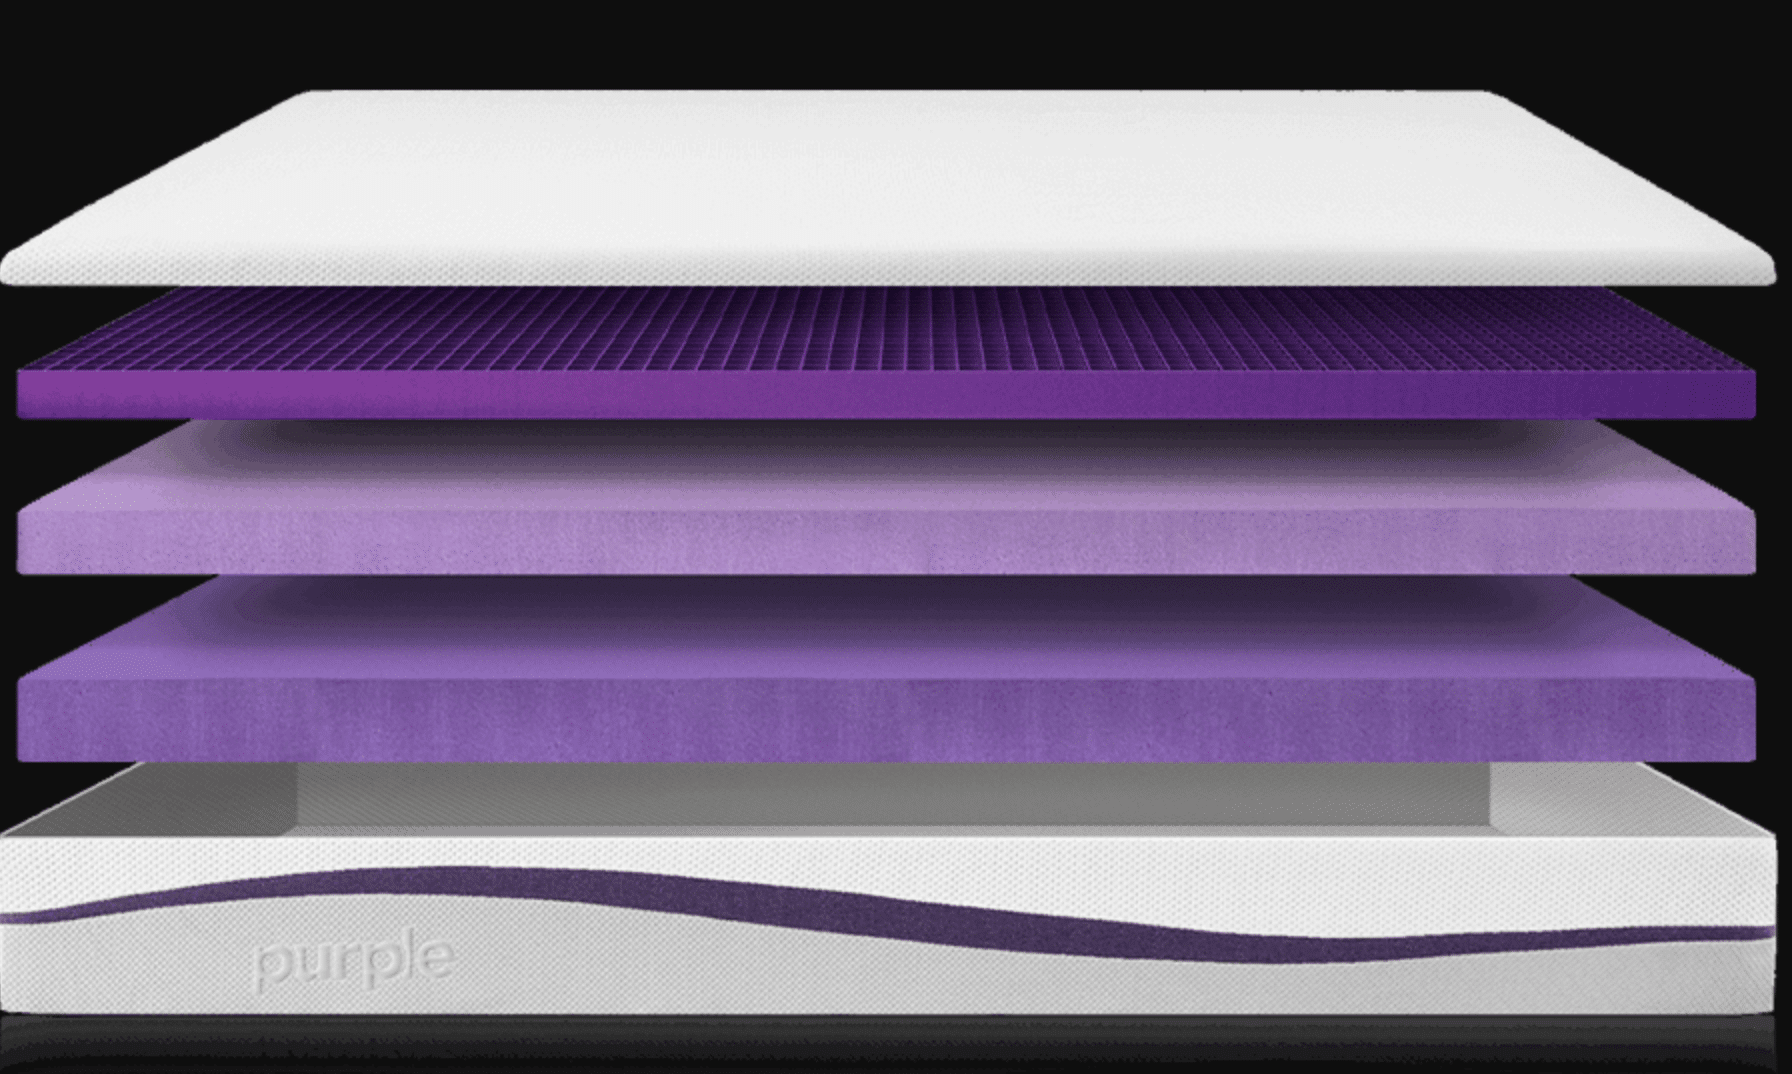 original purple mattress height